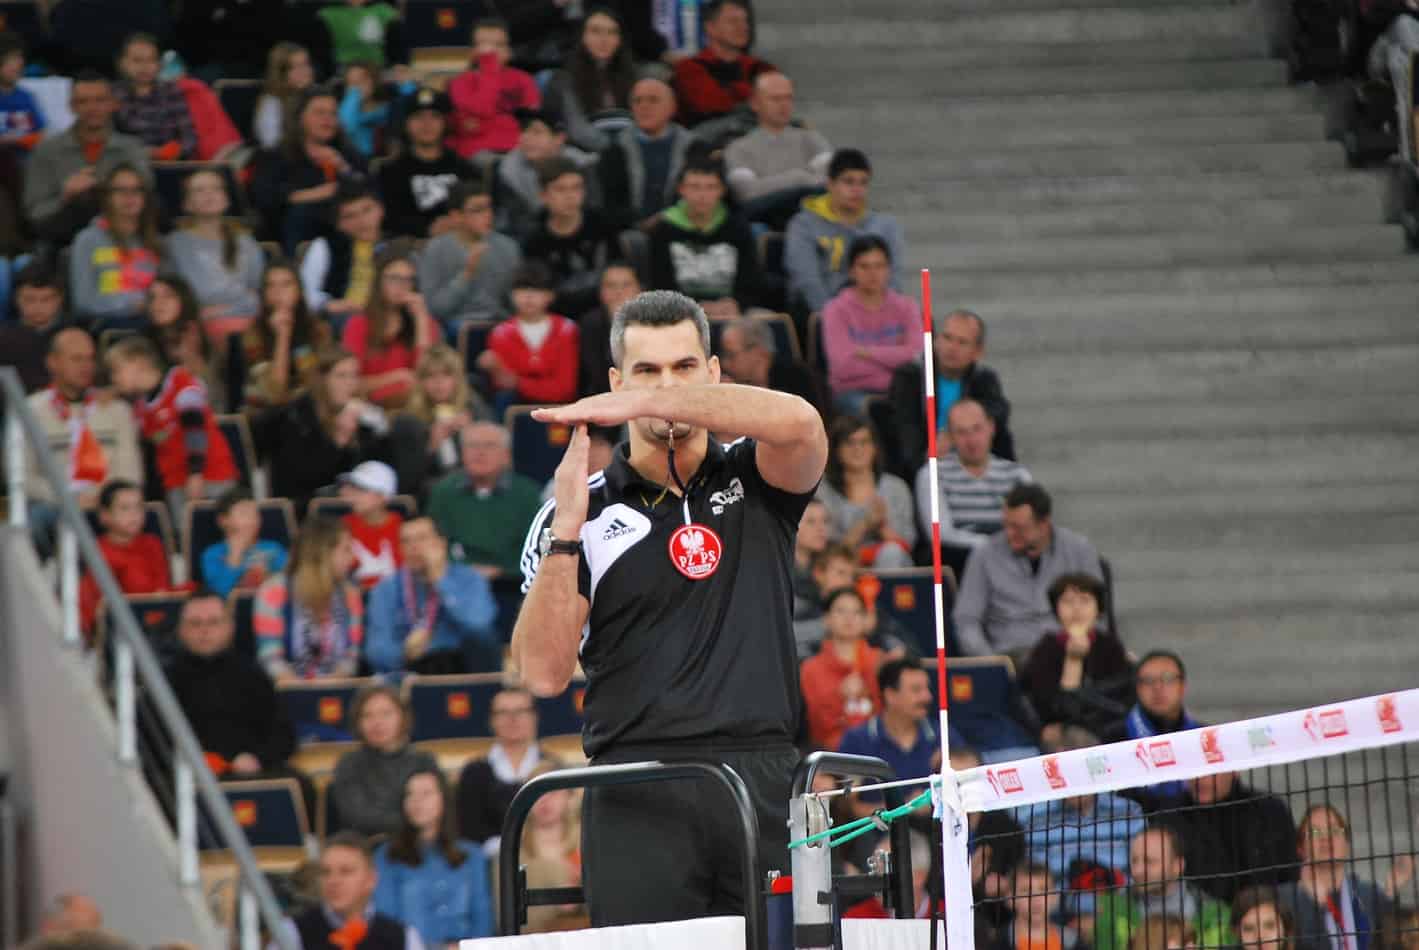 volleyball referee signals pdf